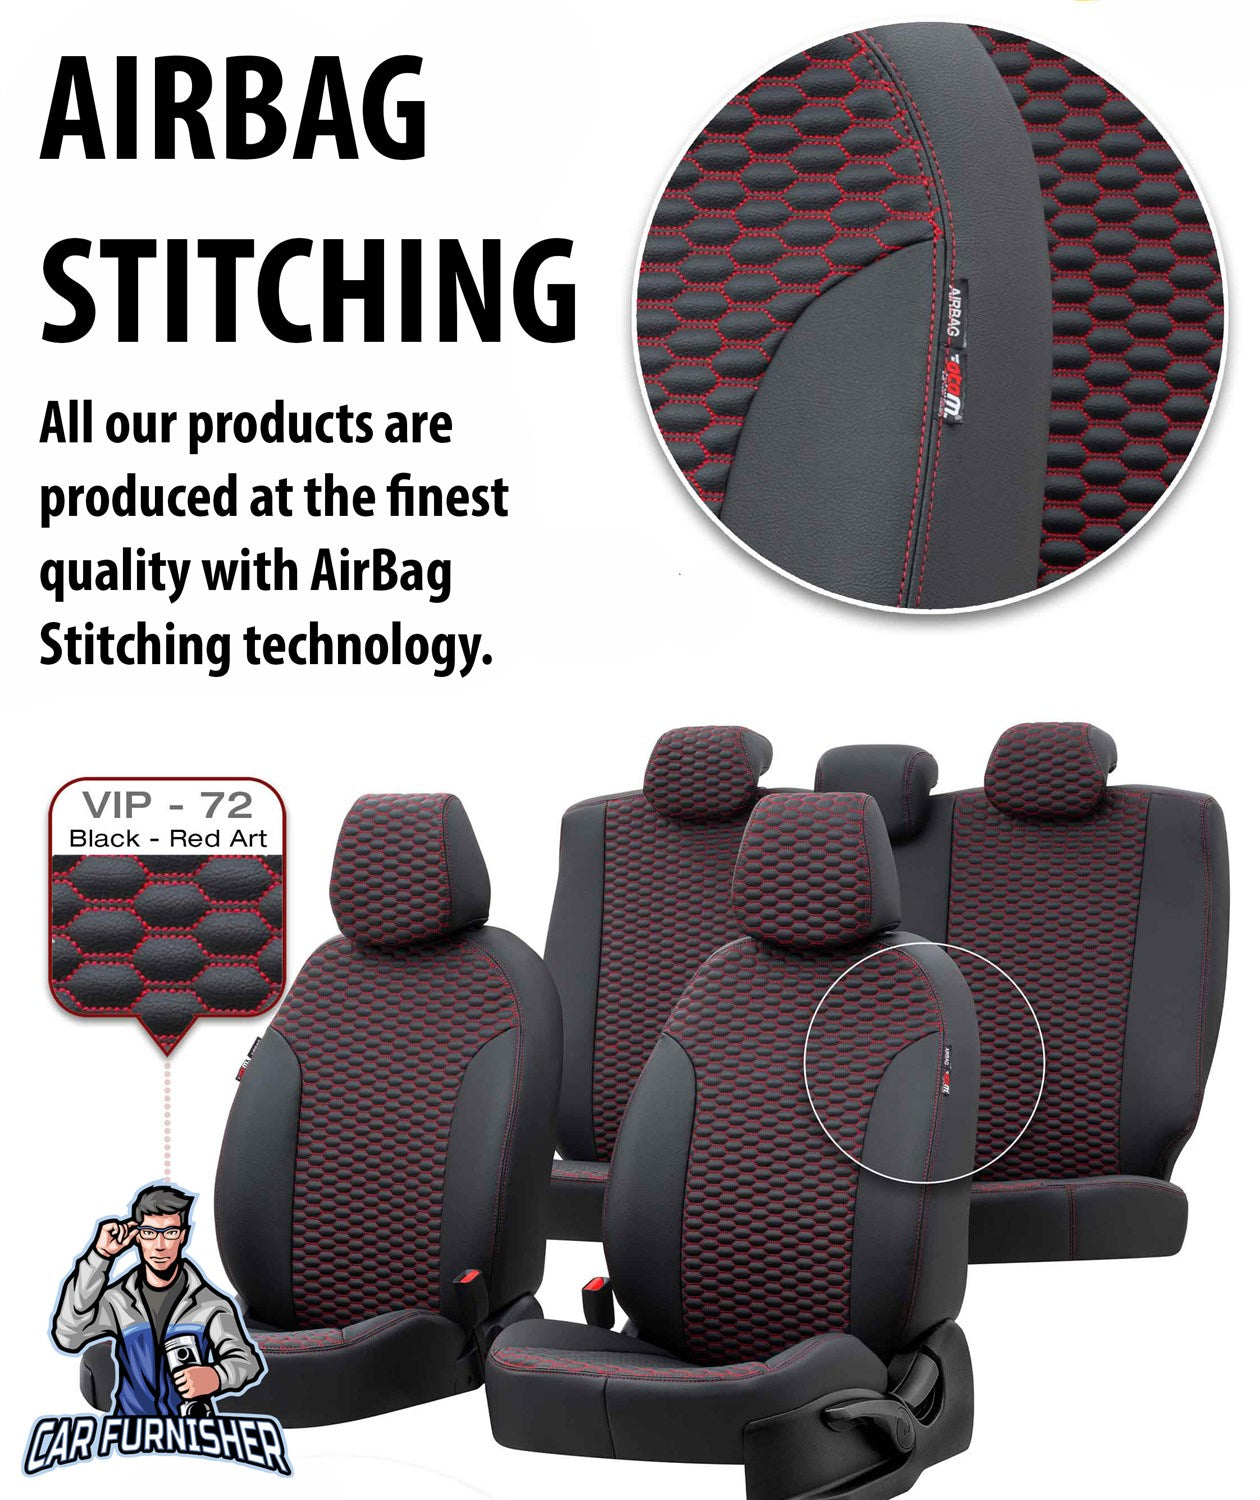 Suzuki Swift Seat Covers Tokyo Leather Design Smoked Leather